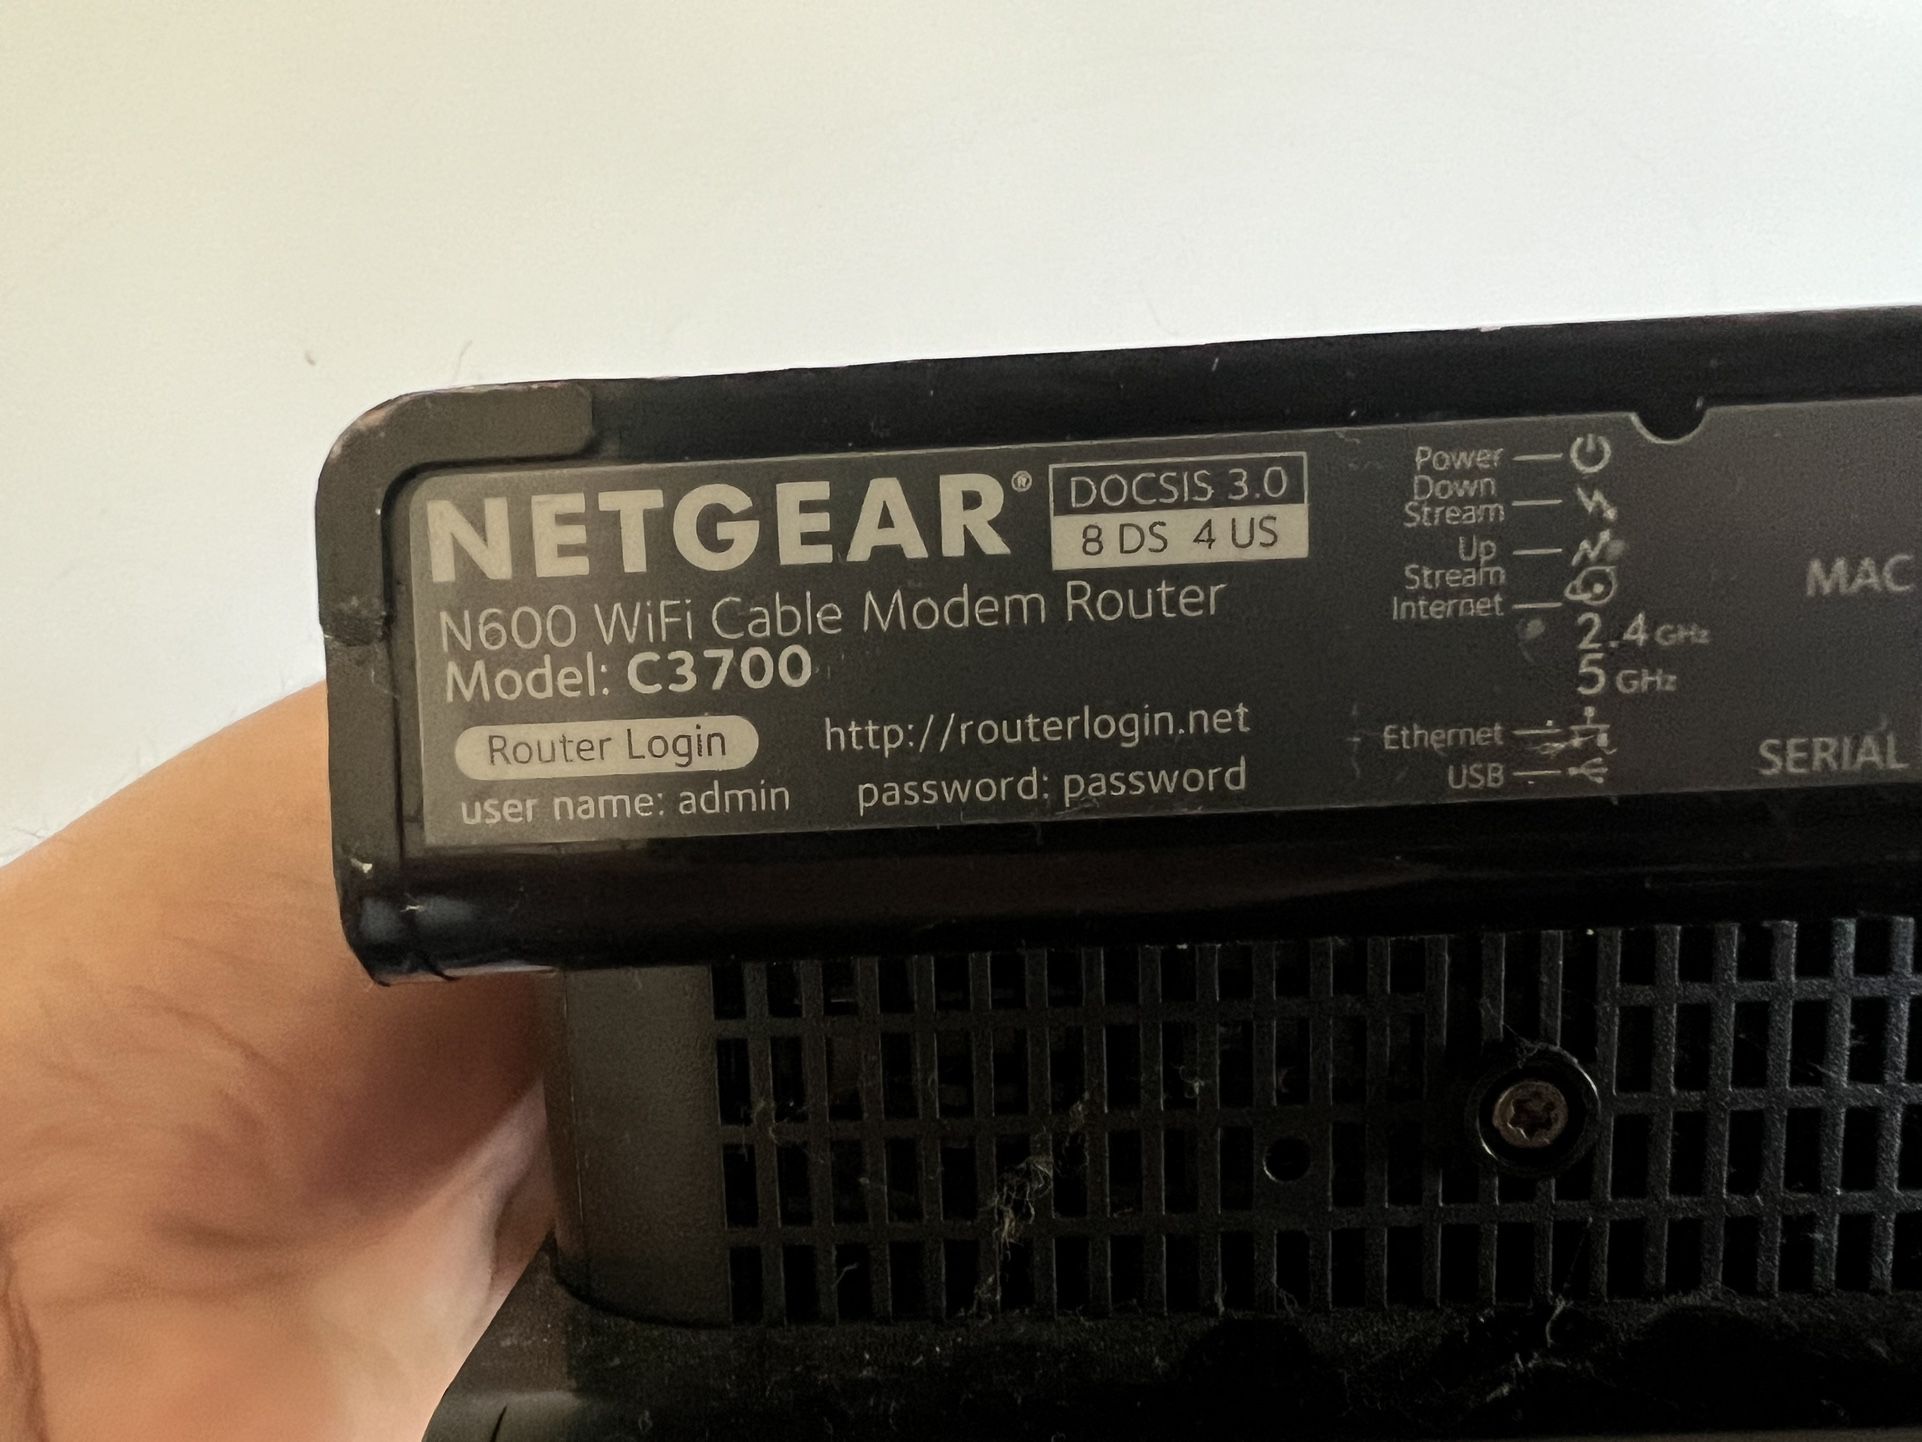 Netgear N600 - model C3700 - Modem Router